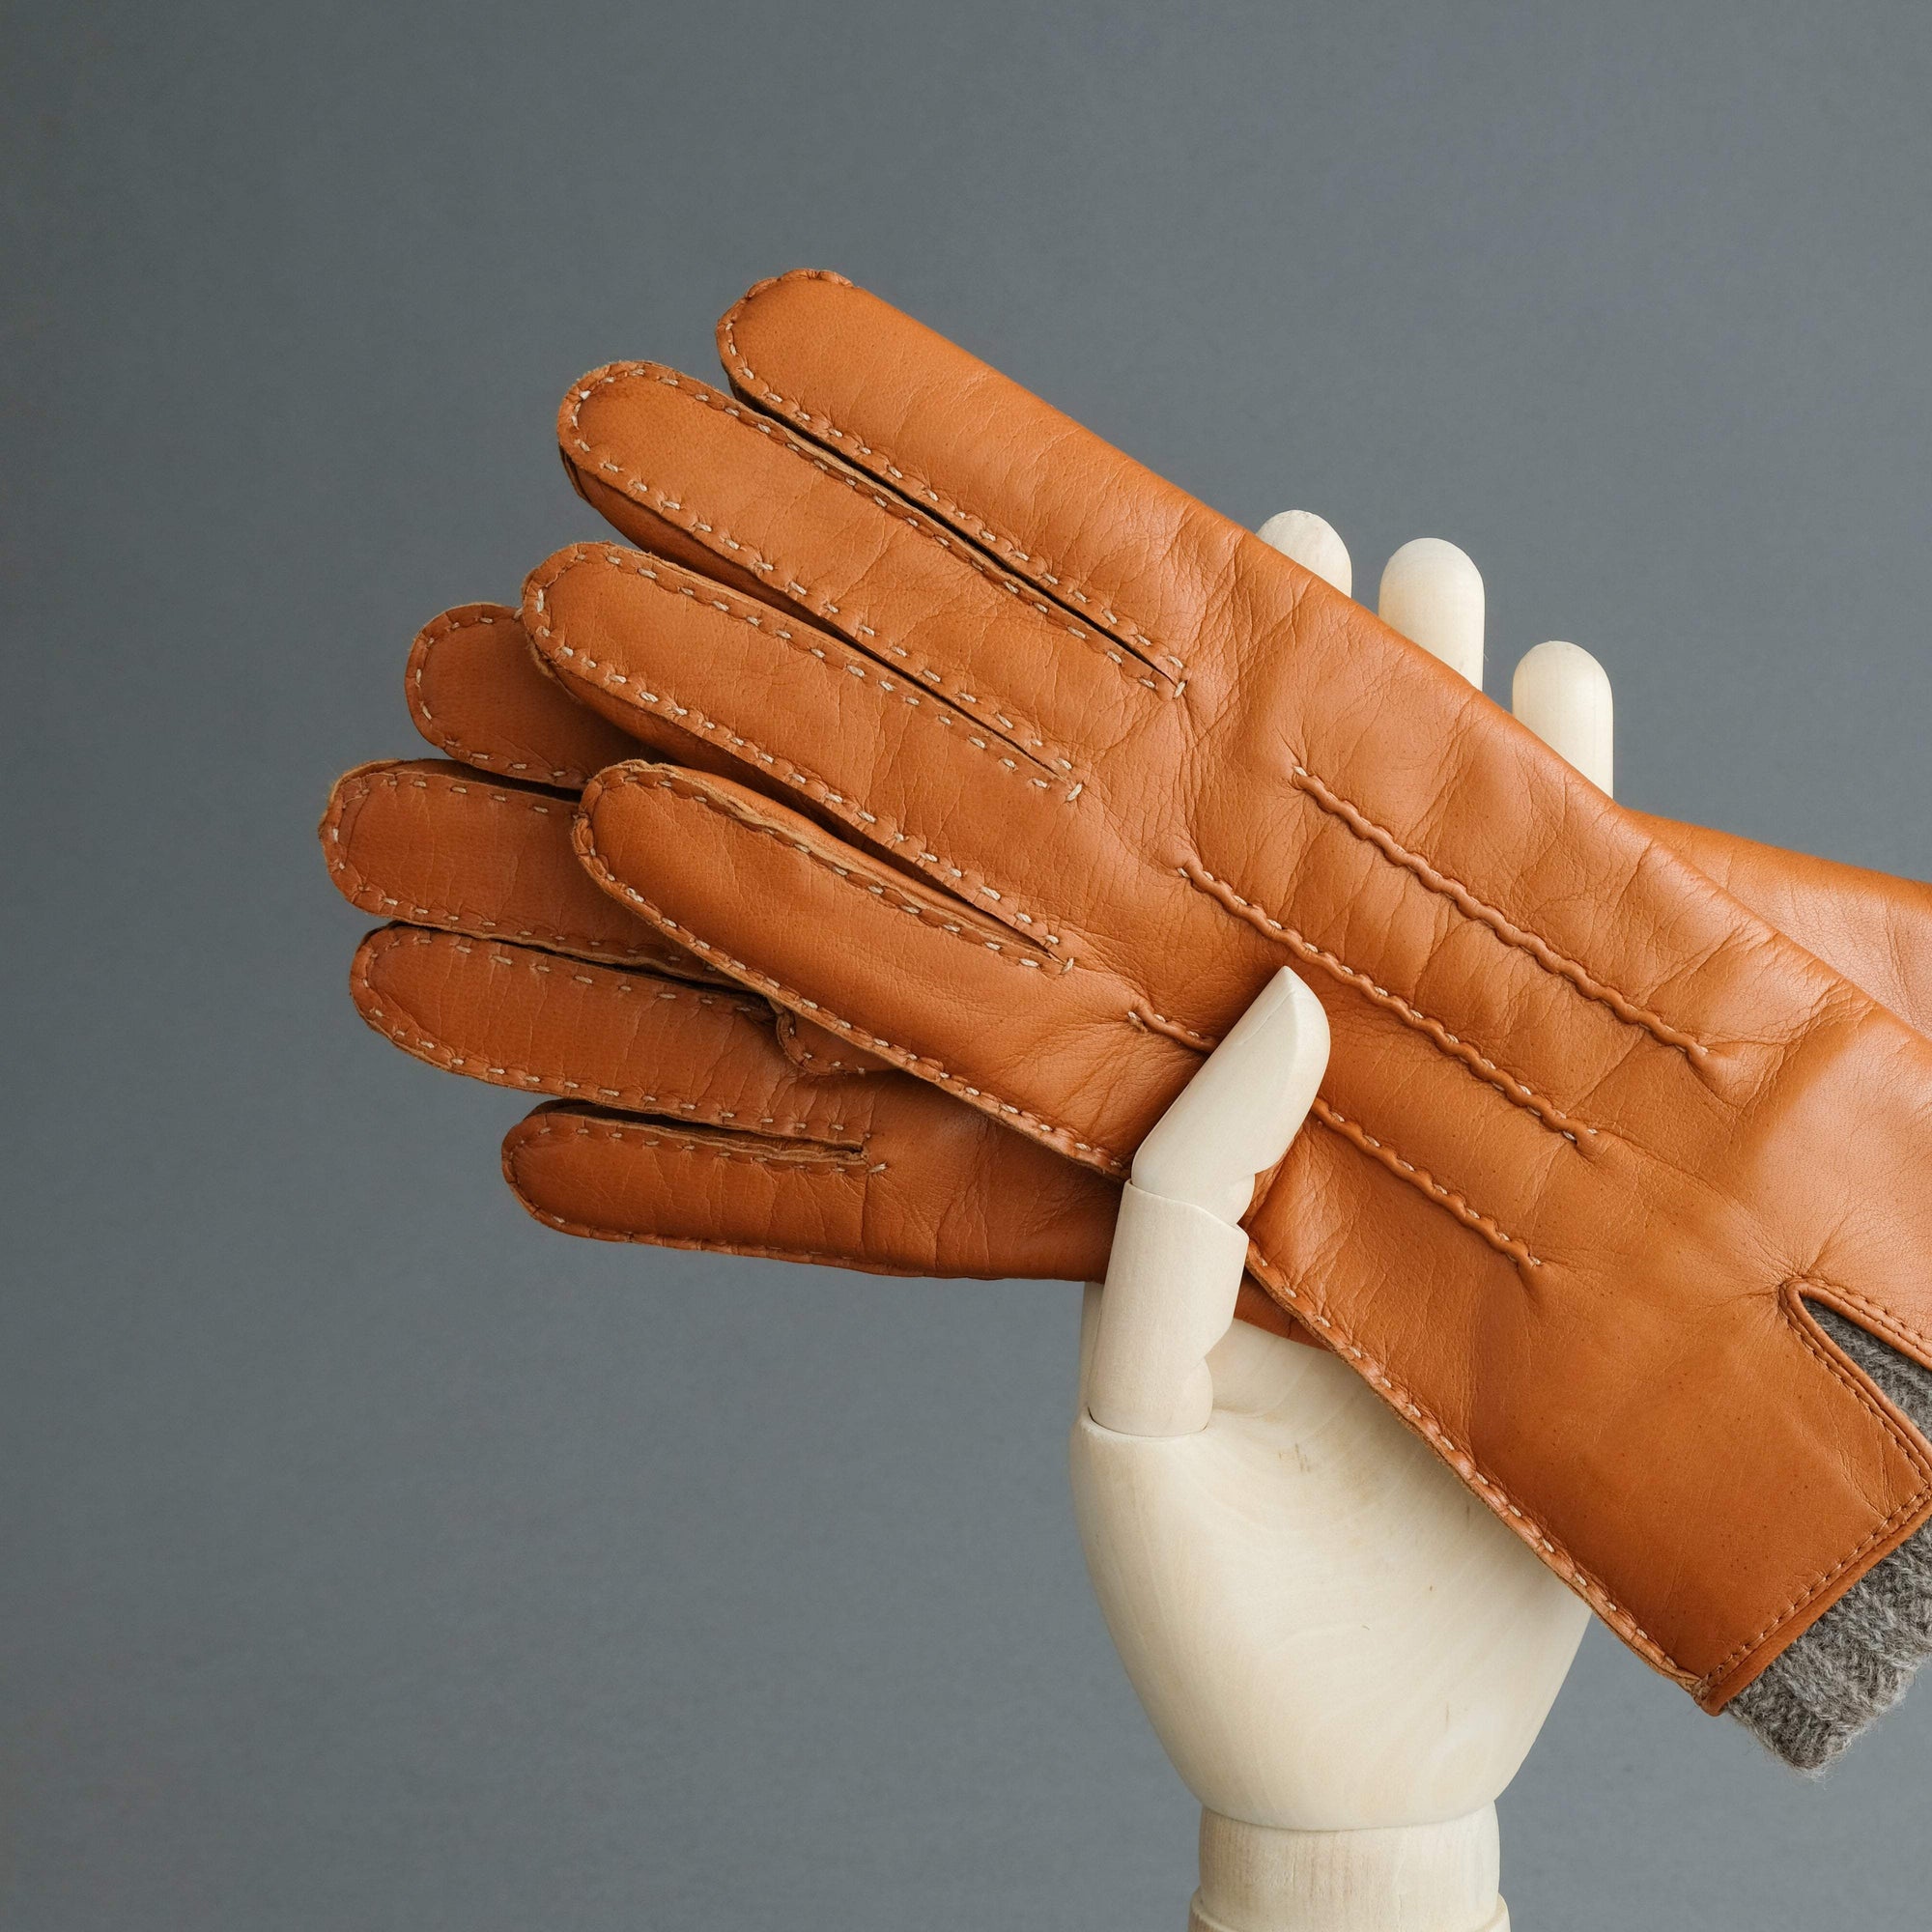 Gentlemen's Gloves from Hair Sheep Nappa Lined with Cashmere - TR Handschuhe Wien - Thomas Riemer Handmade Gloves